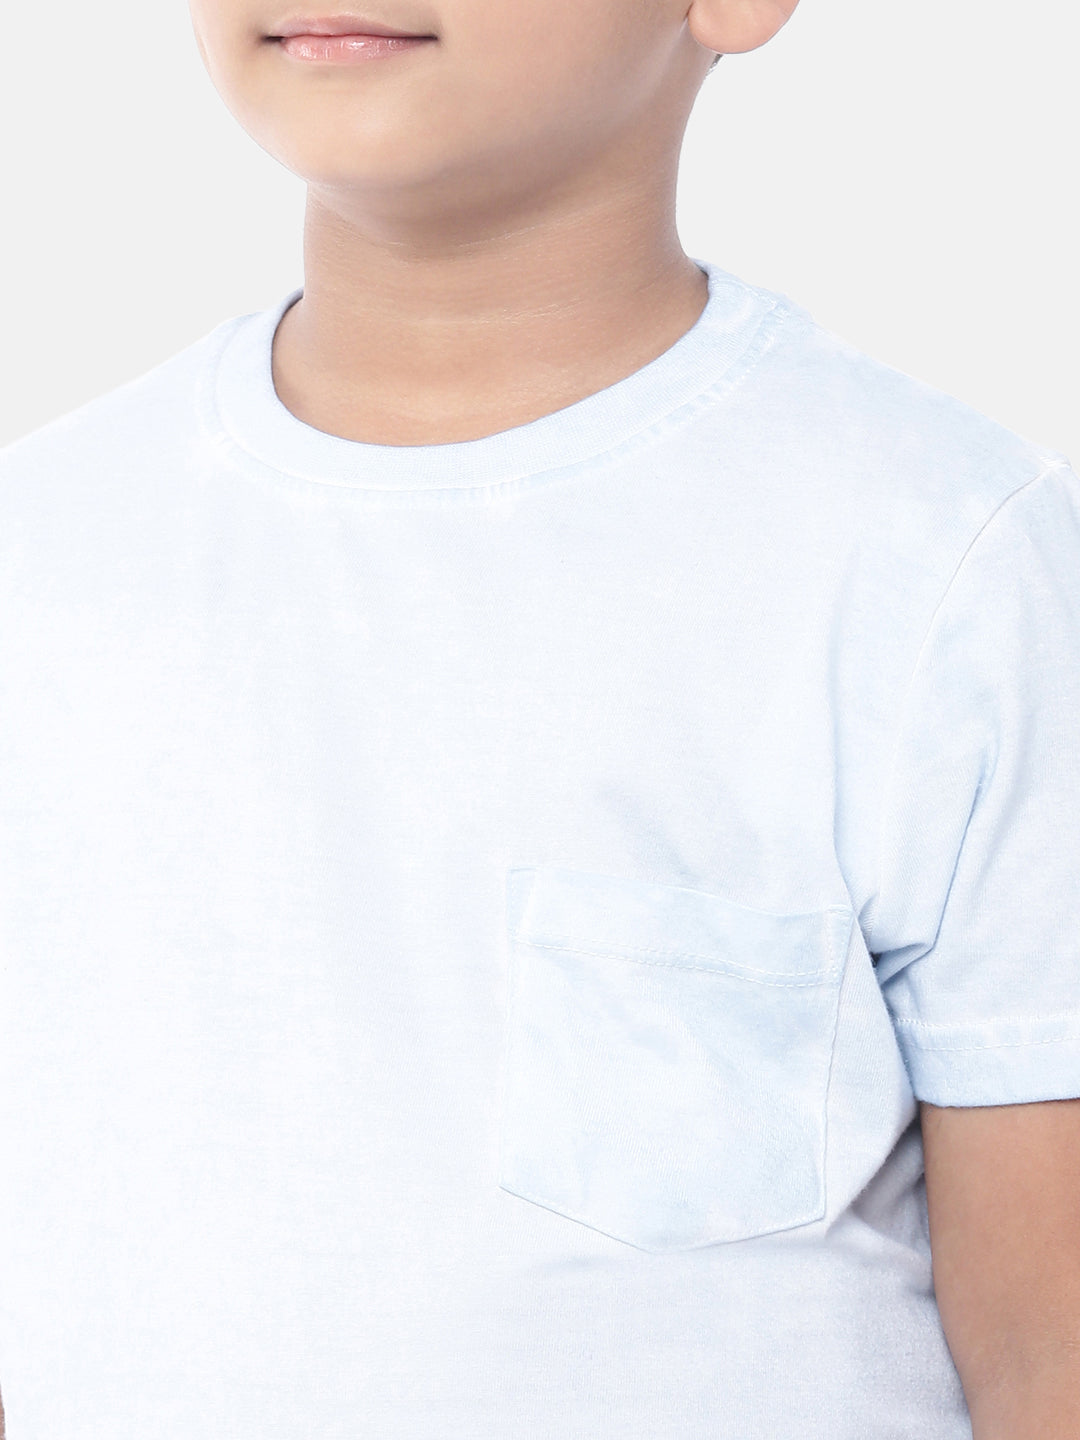 Kids - Boys Half Sleeve T-Shirt Light Sea Blue